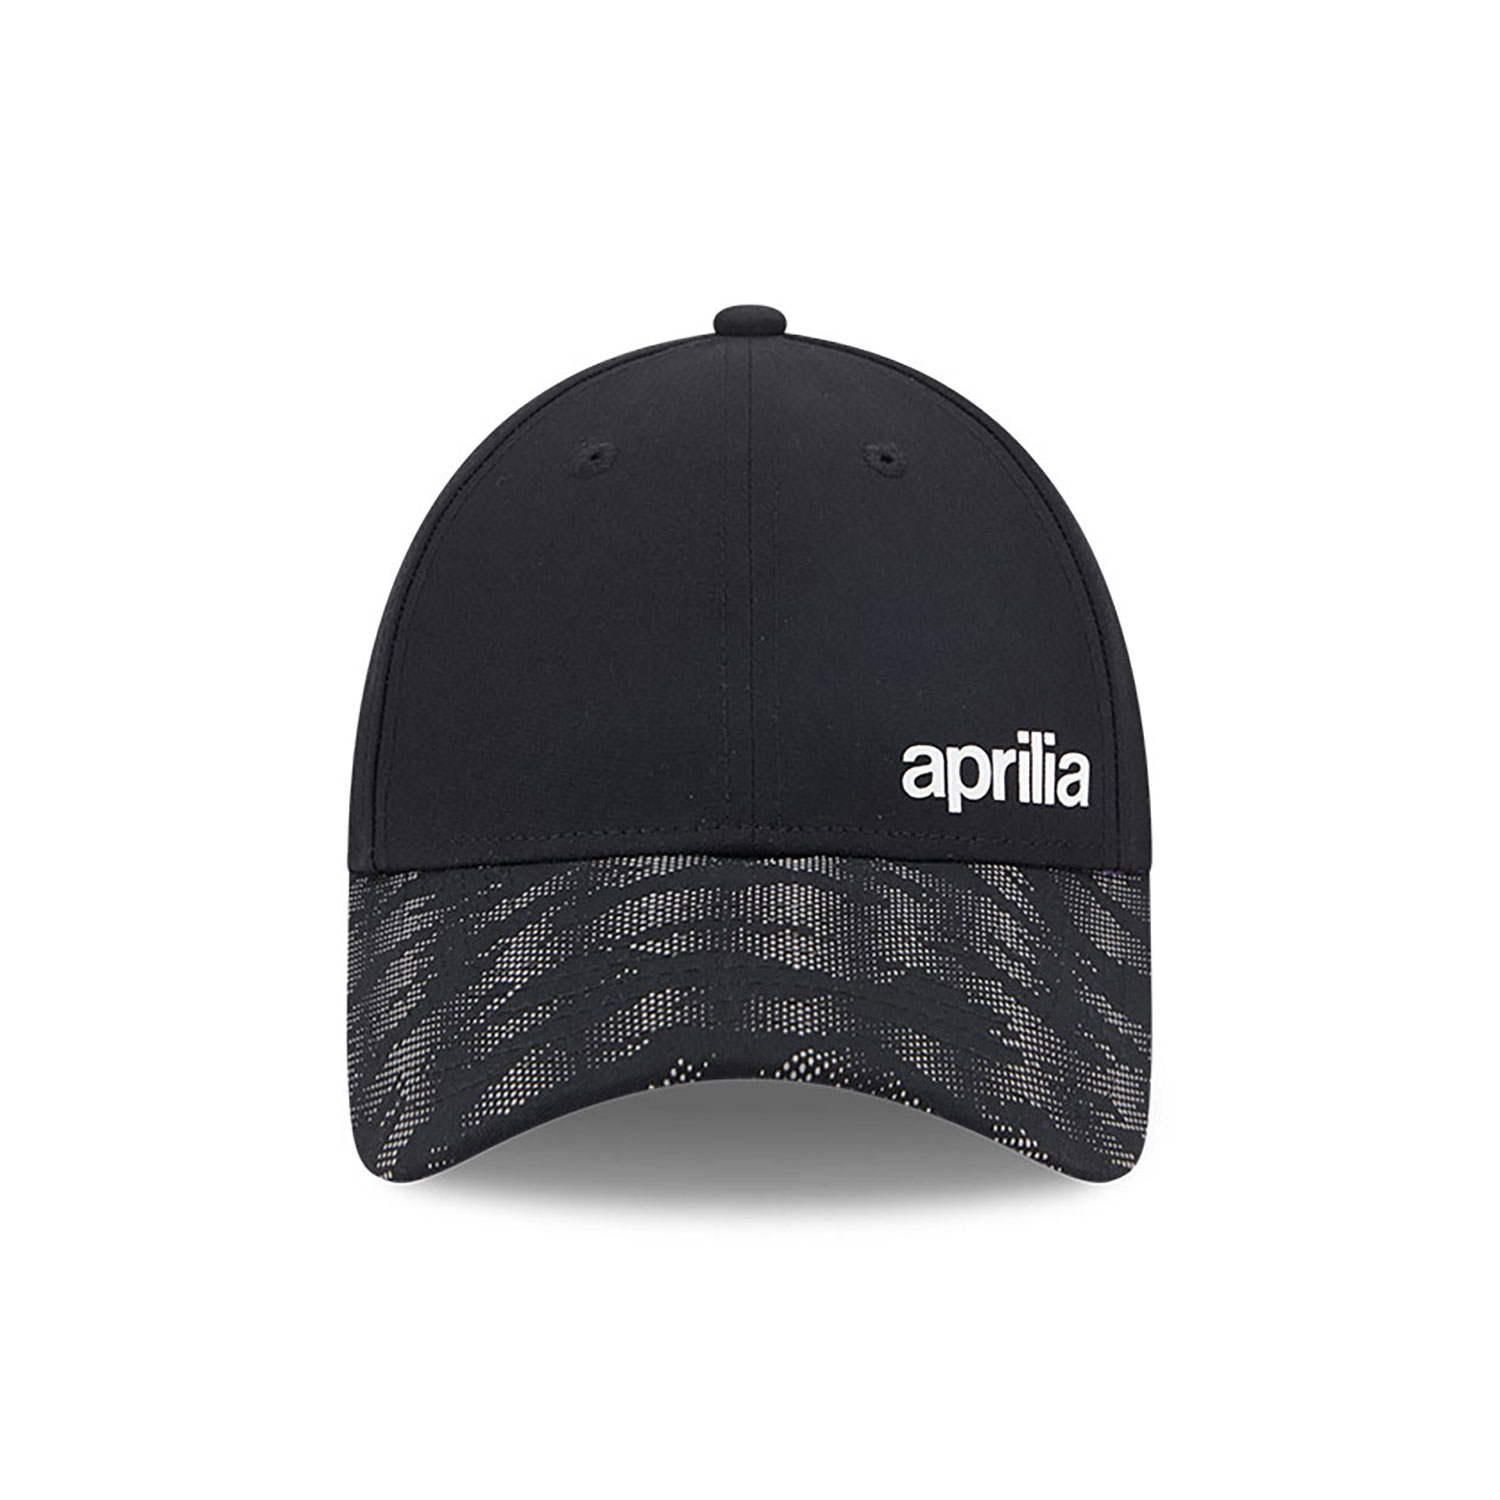 Aprilia Reflective Visor Black 9FORTY Adjustable Cap